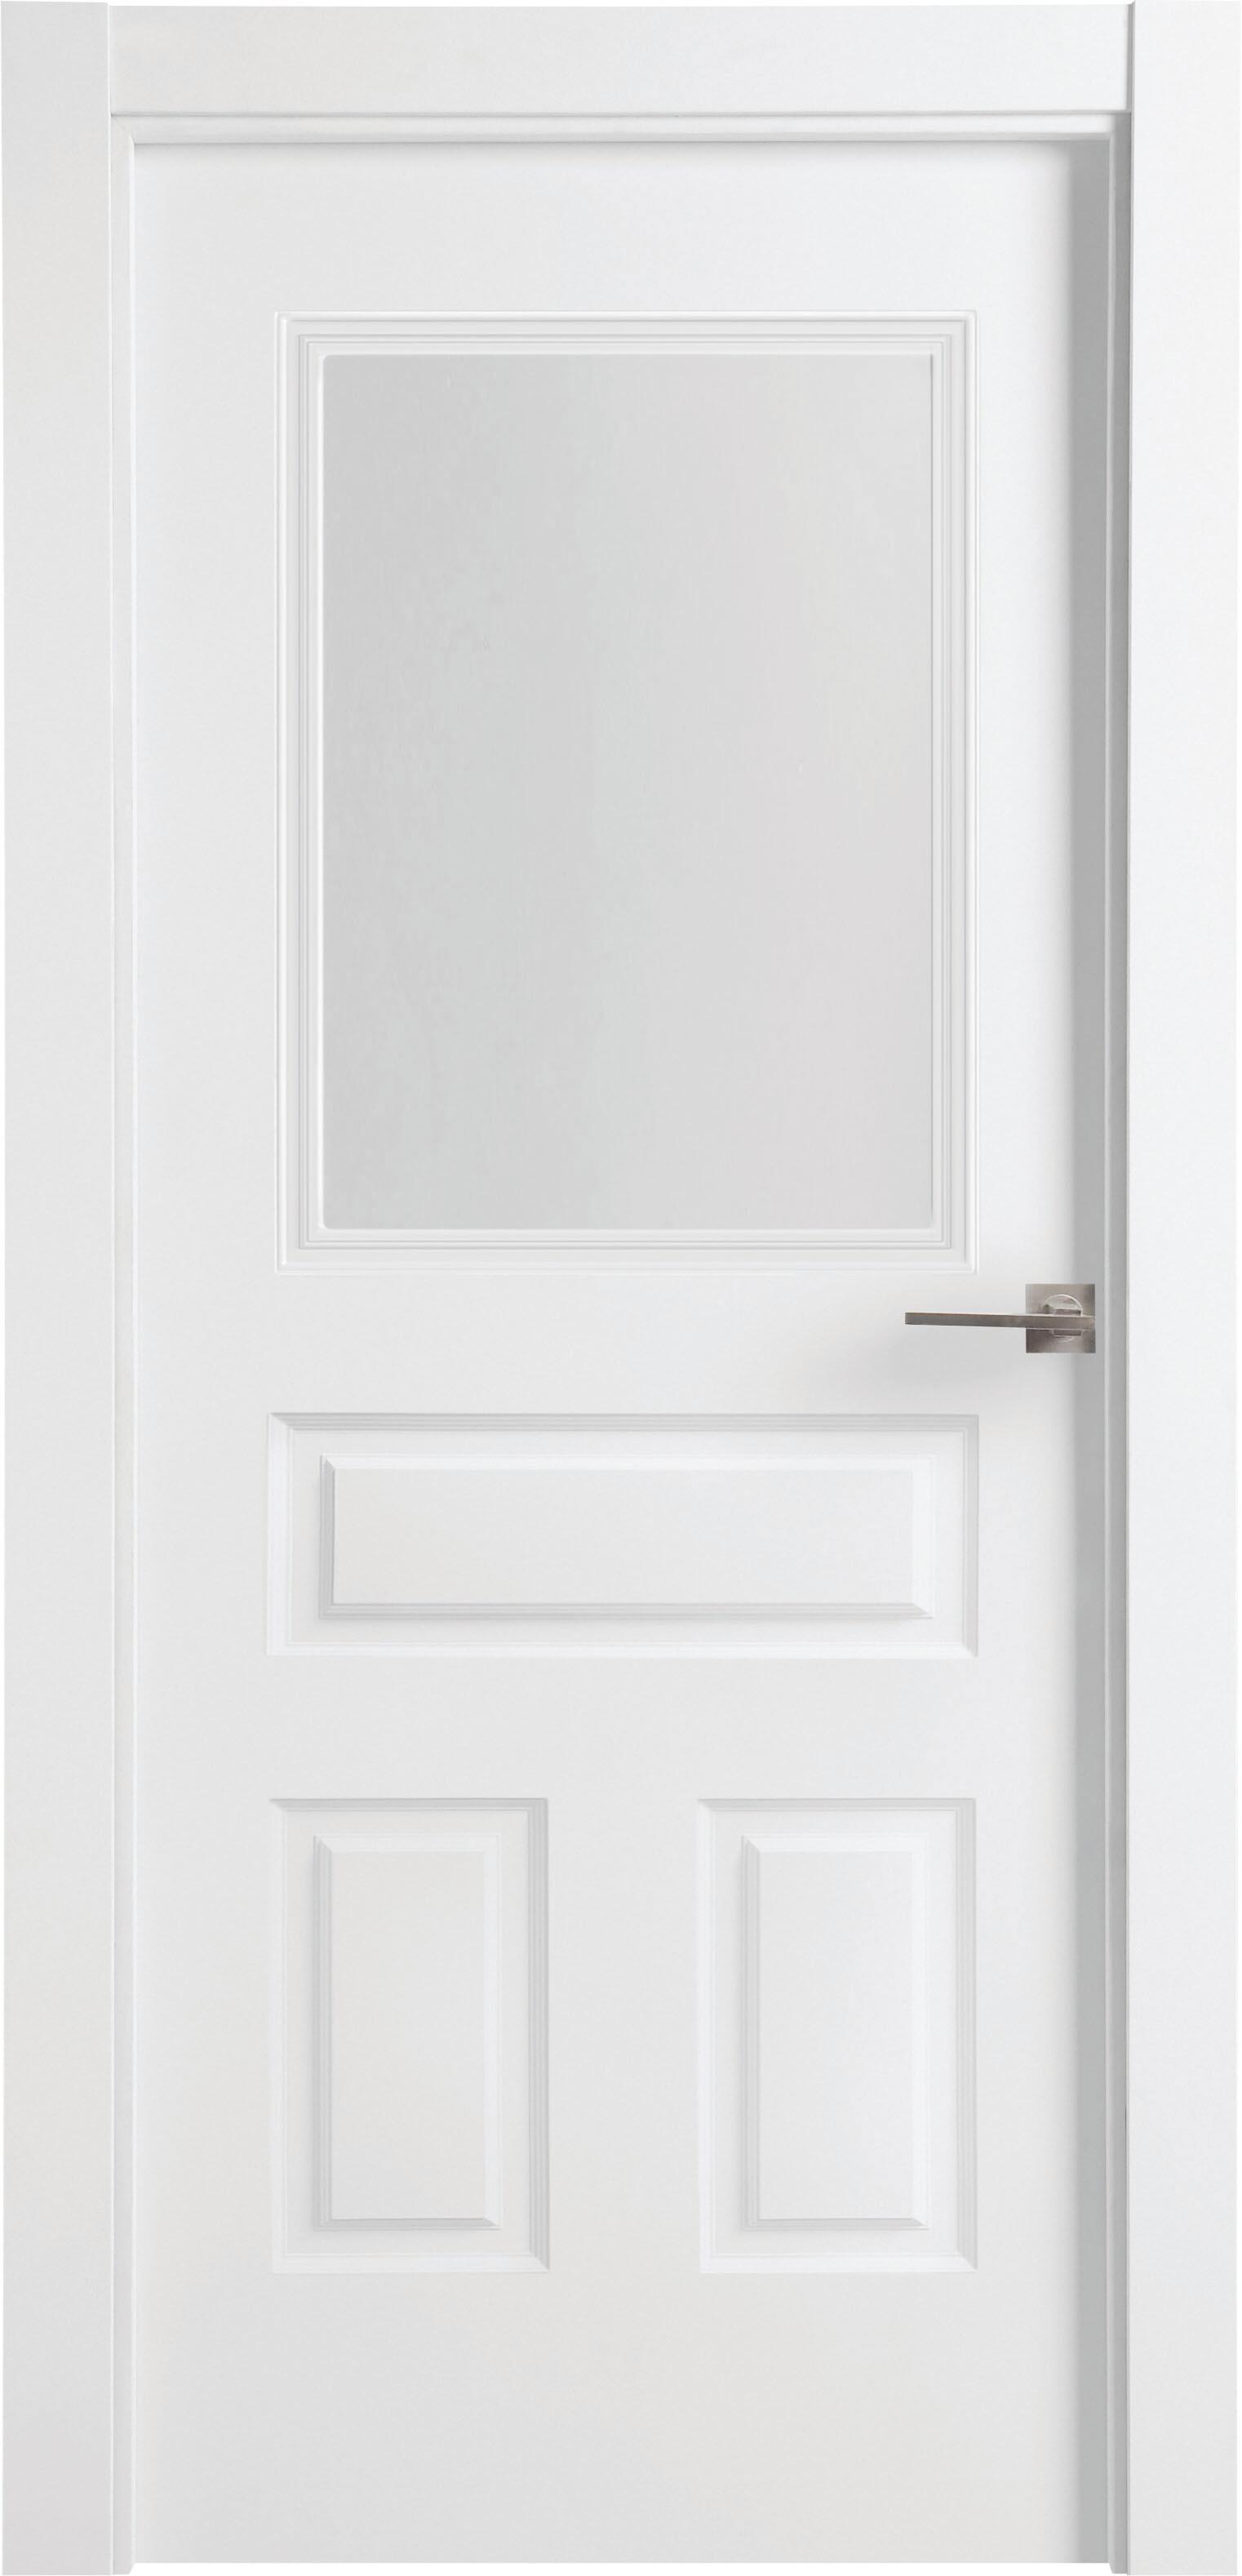 Puerta indiana plus blanco apertura izquierda con cristal de 9x72,5cm